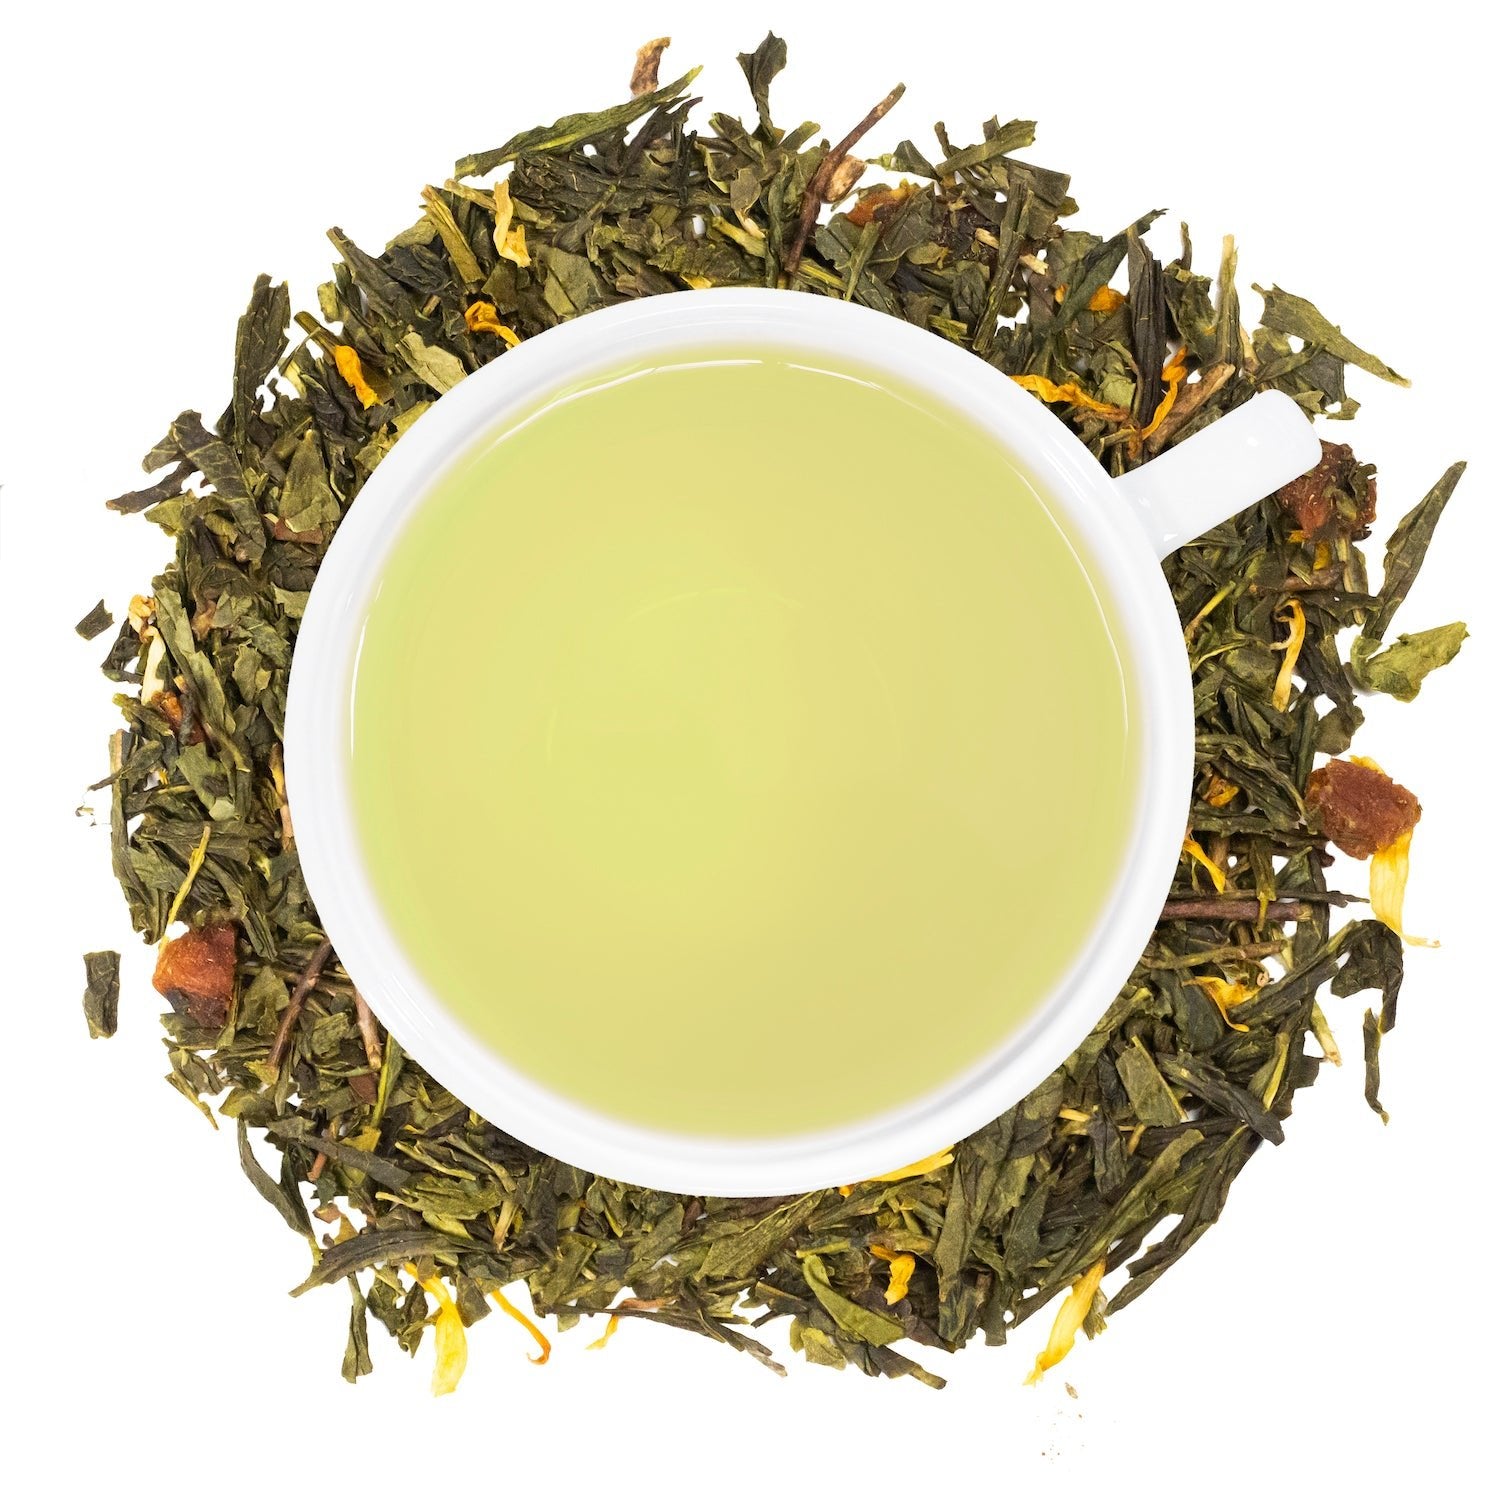 Organic Peach Green Tea - Loose Leaf Tea - Full Leaf Tea Company